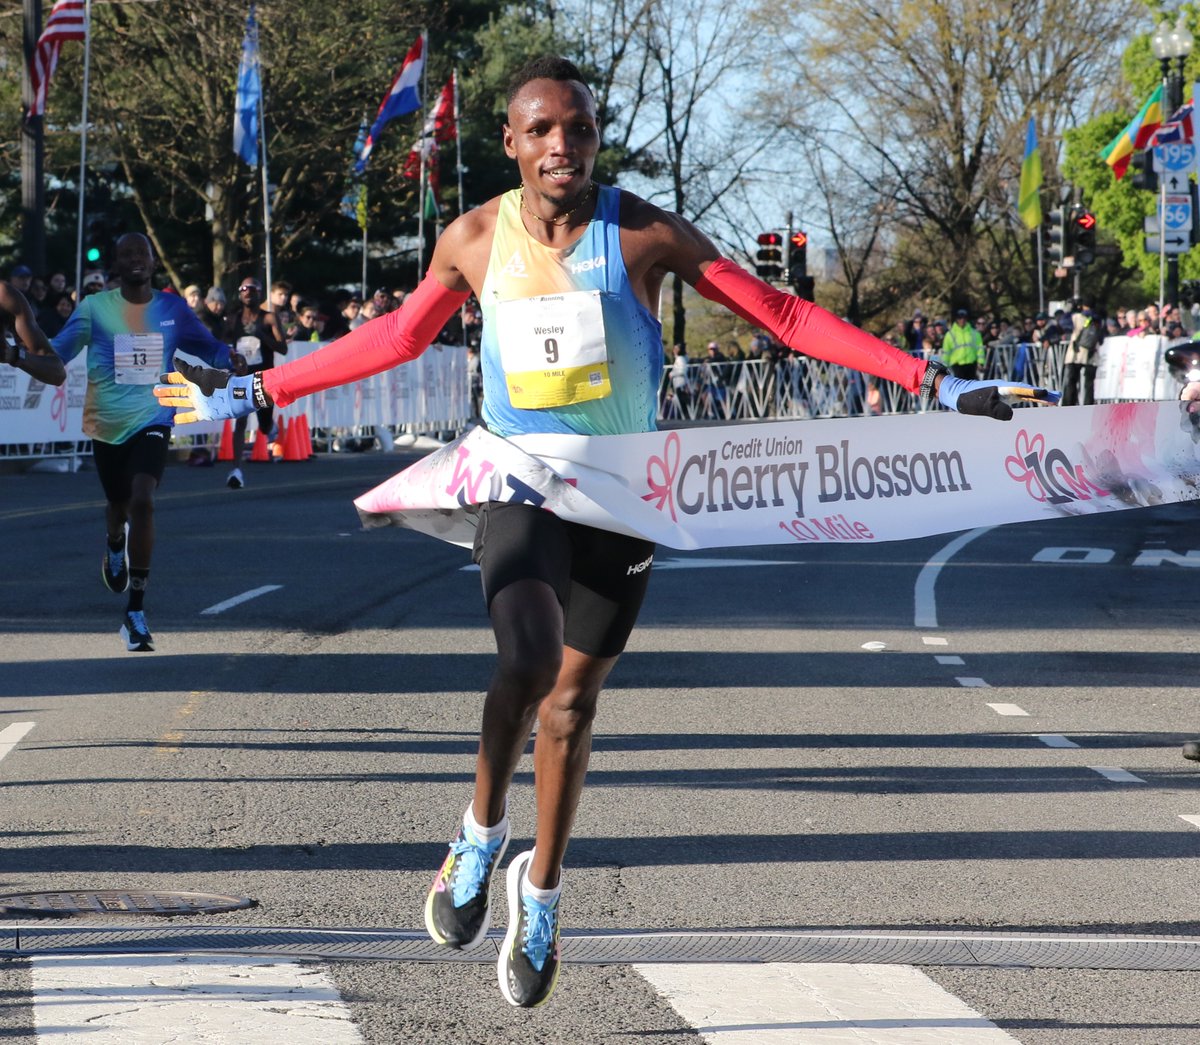 ICYMI: Wesley Kiptoo (@BanguriaK) WON this morning's Cherry Blossom 10 Mile in Washington DC in a blazing fast 45:53!! WAY TO GO WESLEY!! PC: @JaneMonti1